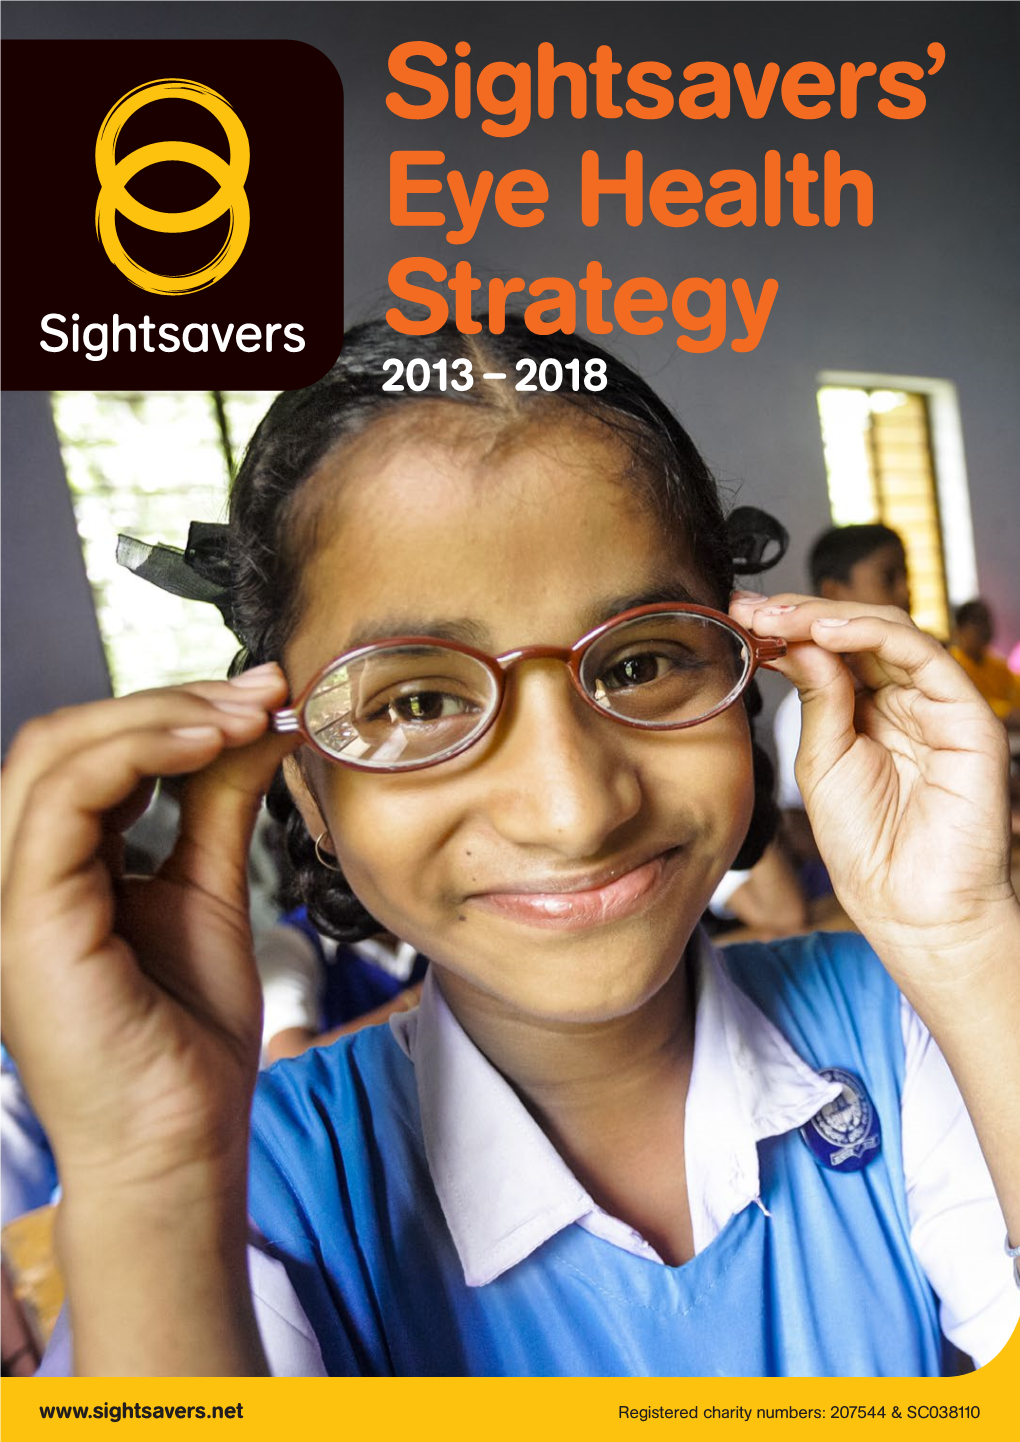 Sightsavers' Eye Health Strategy